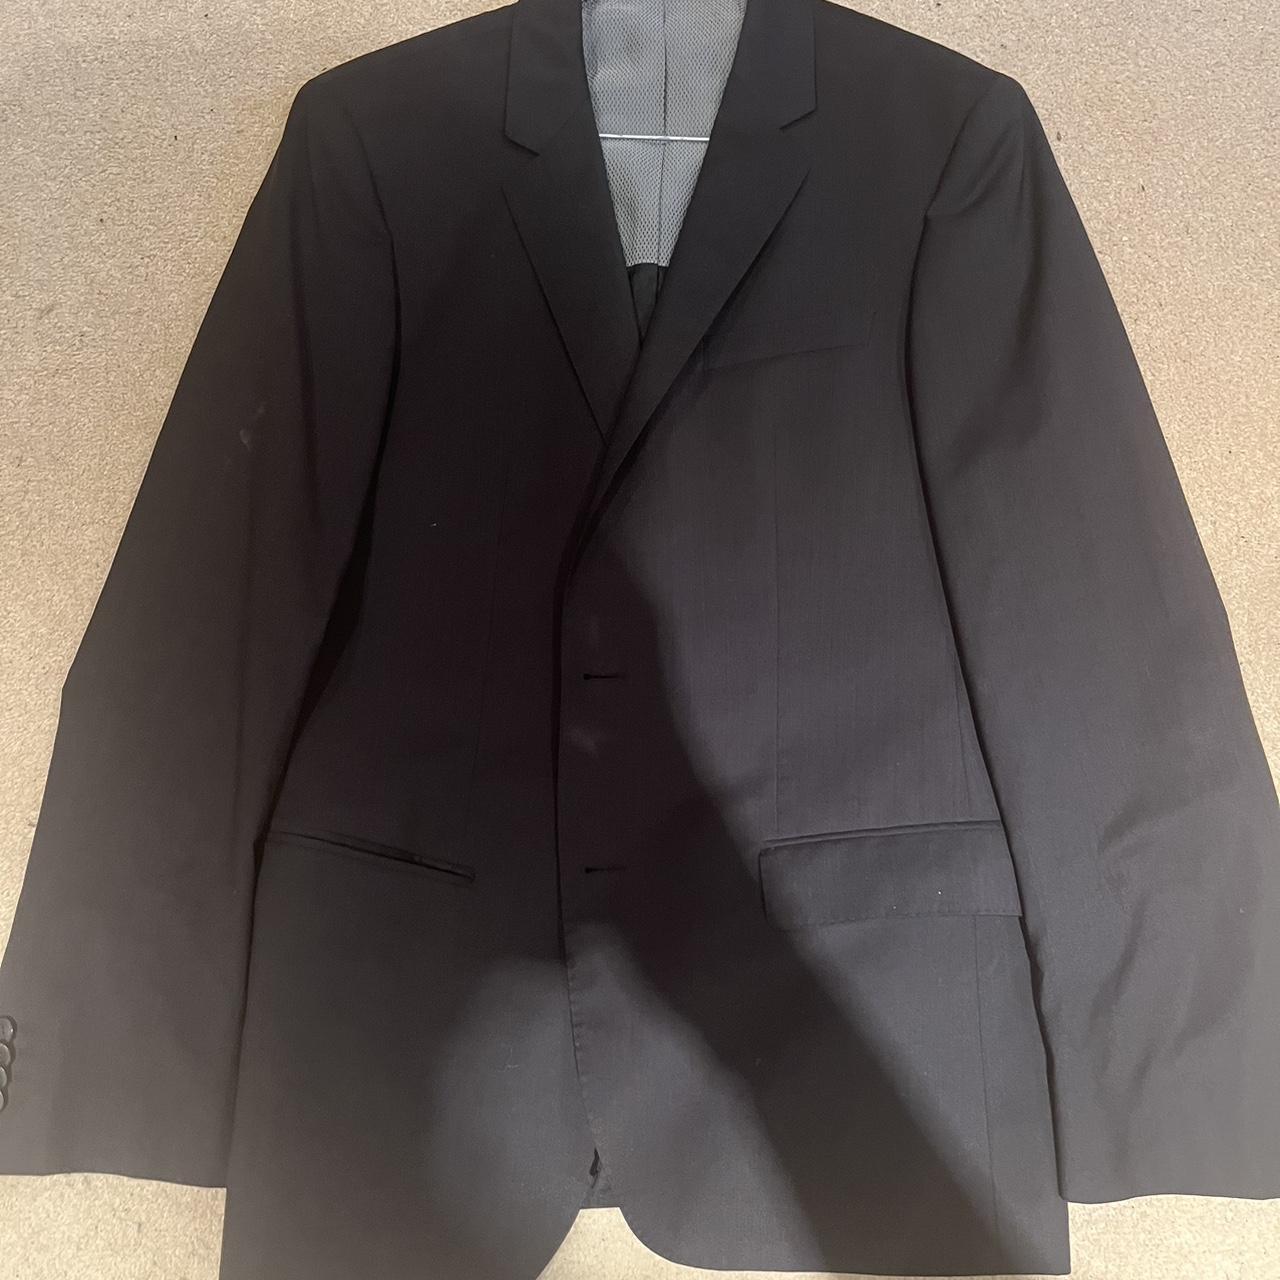 Huge boss suit jacket size 36 - Depop